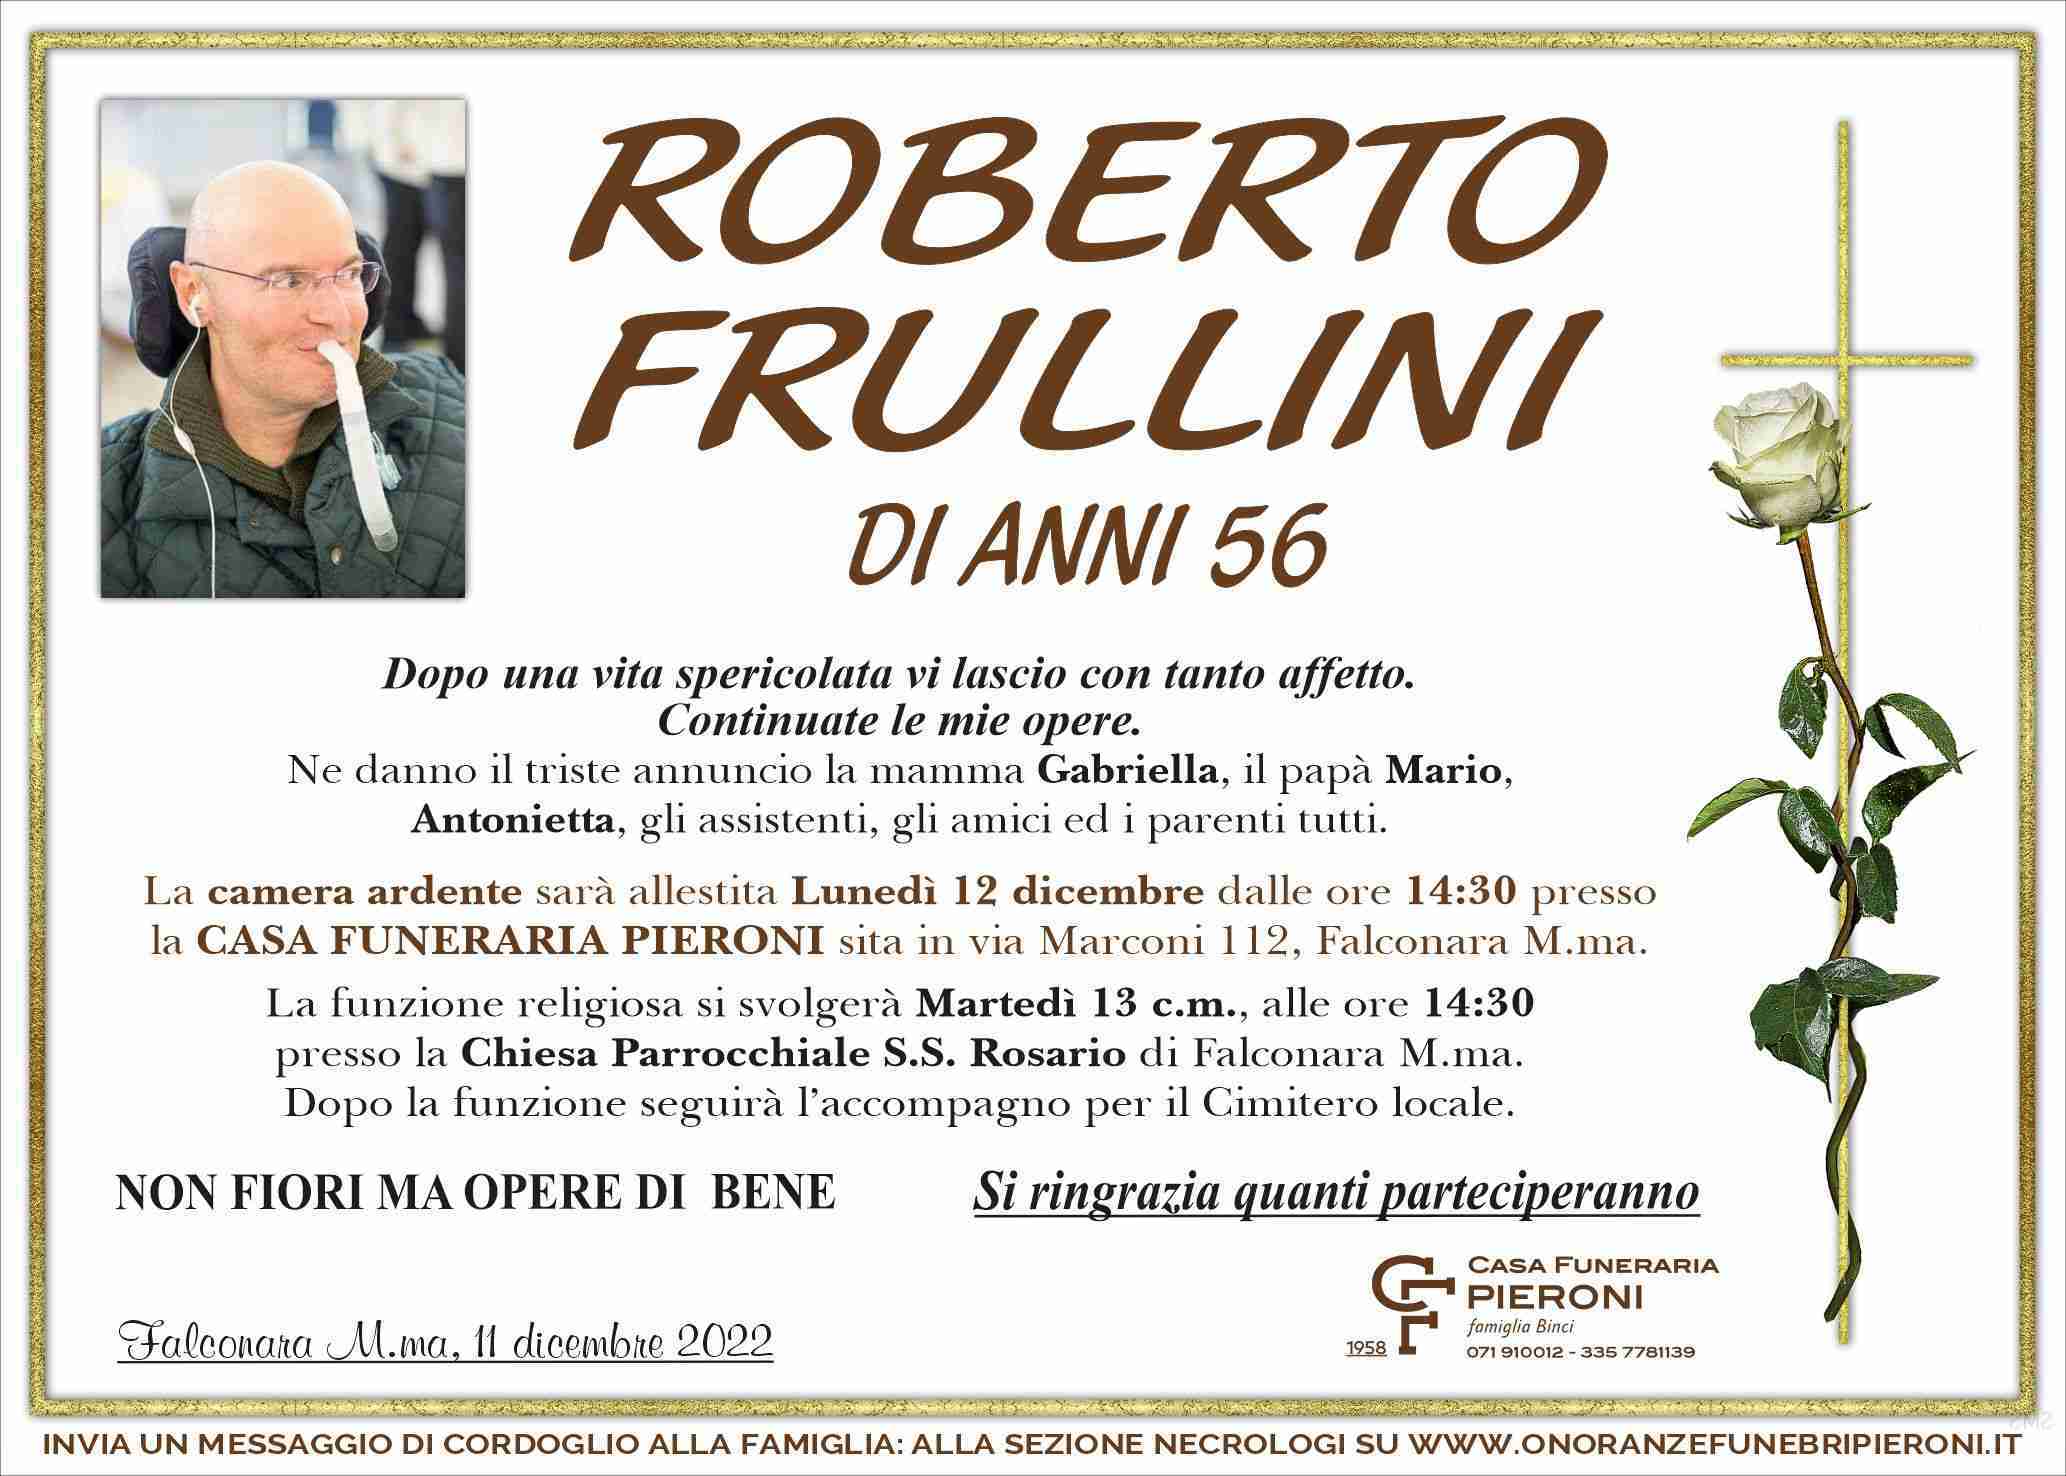 Roberto Frullini